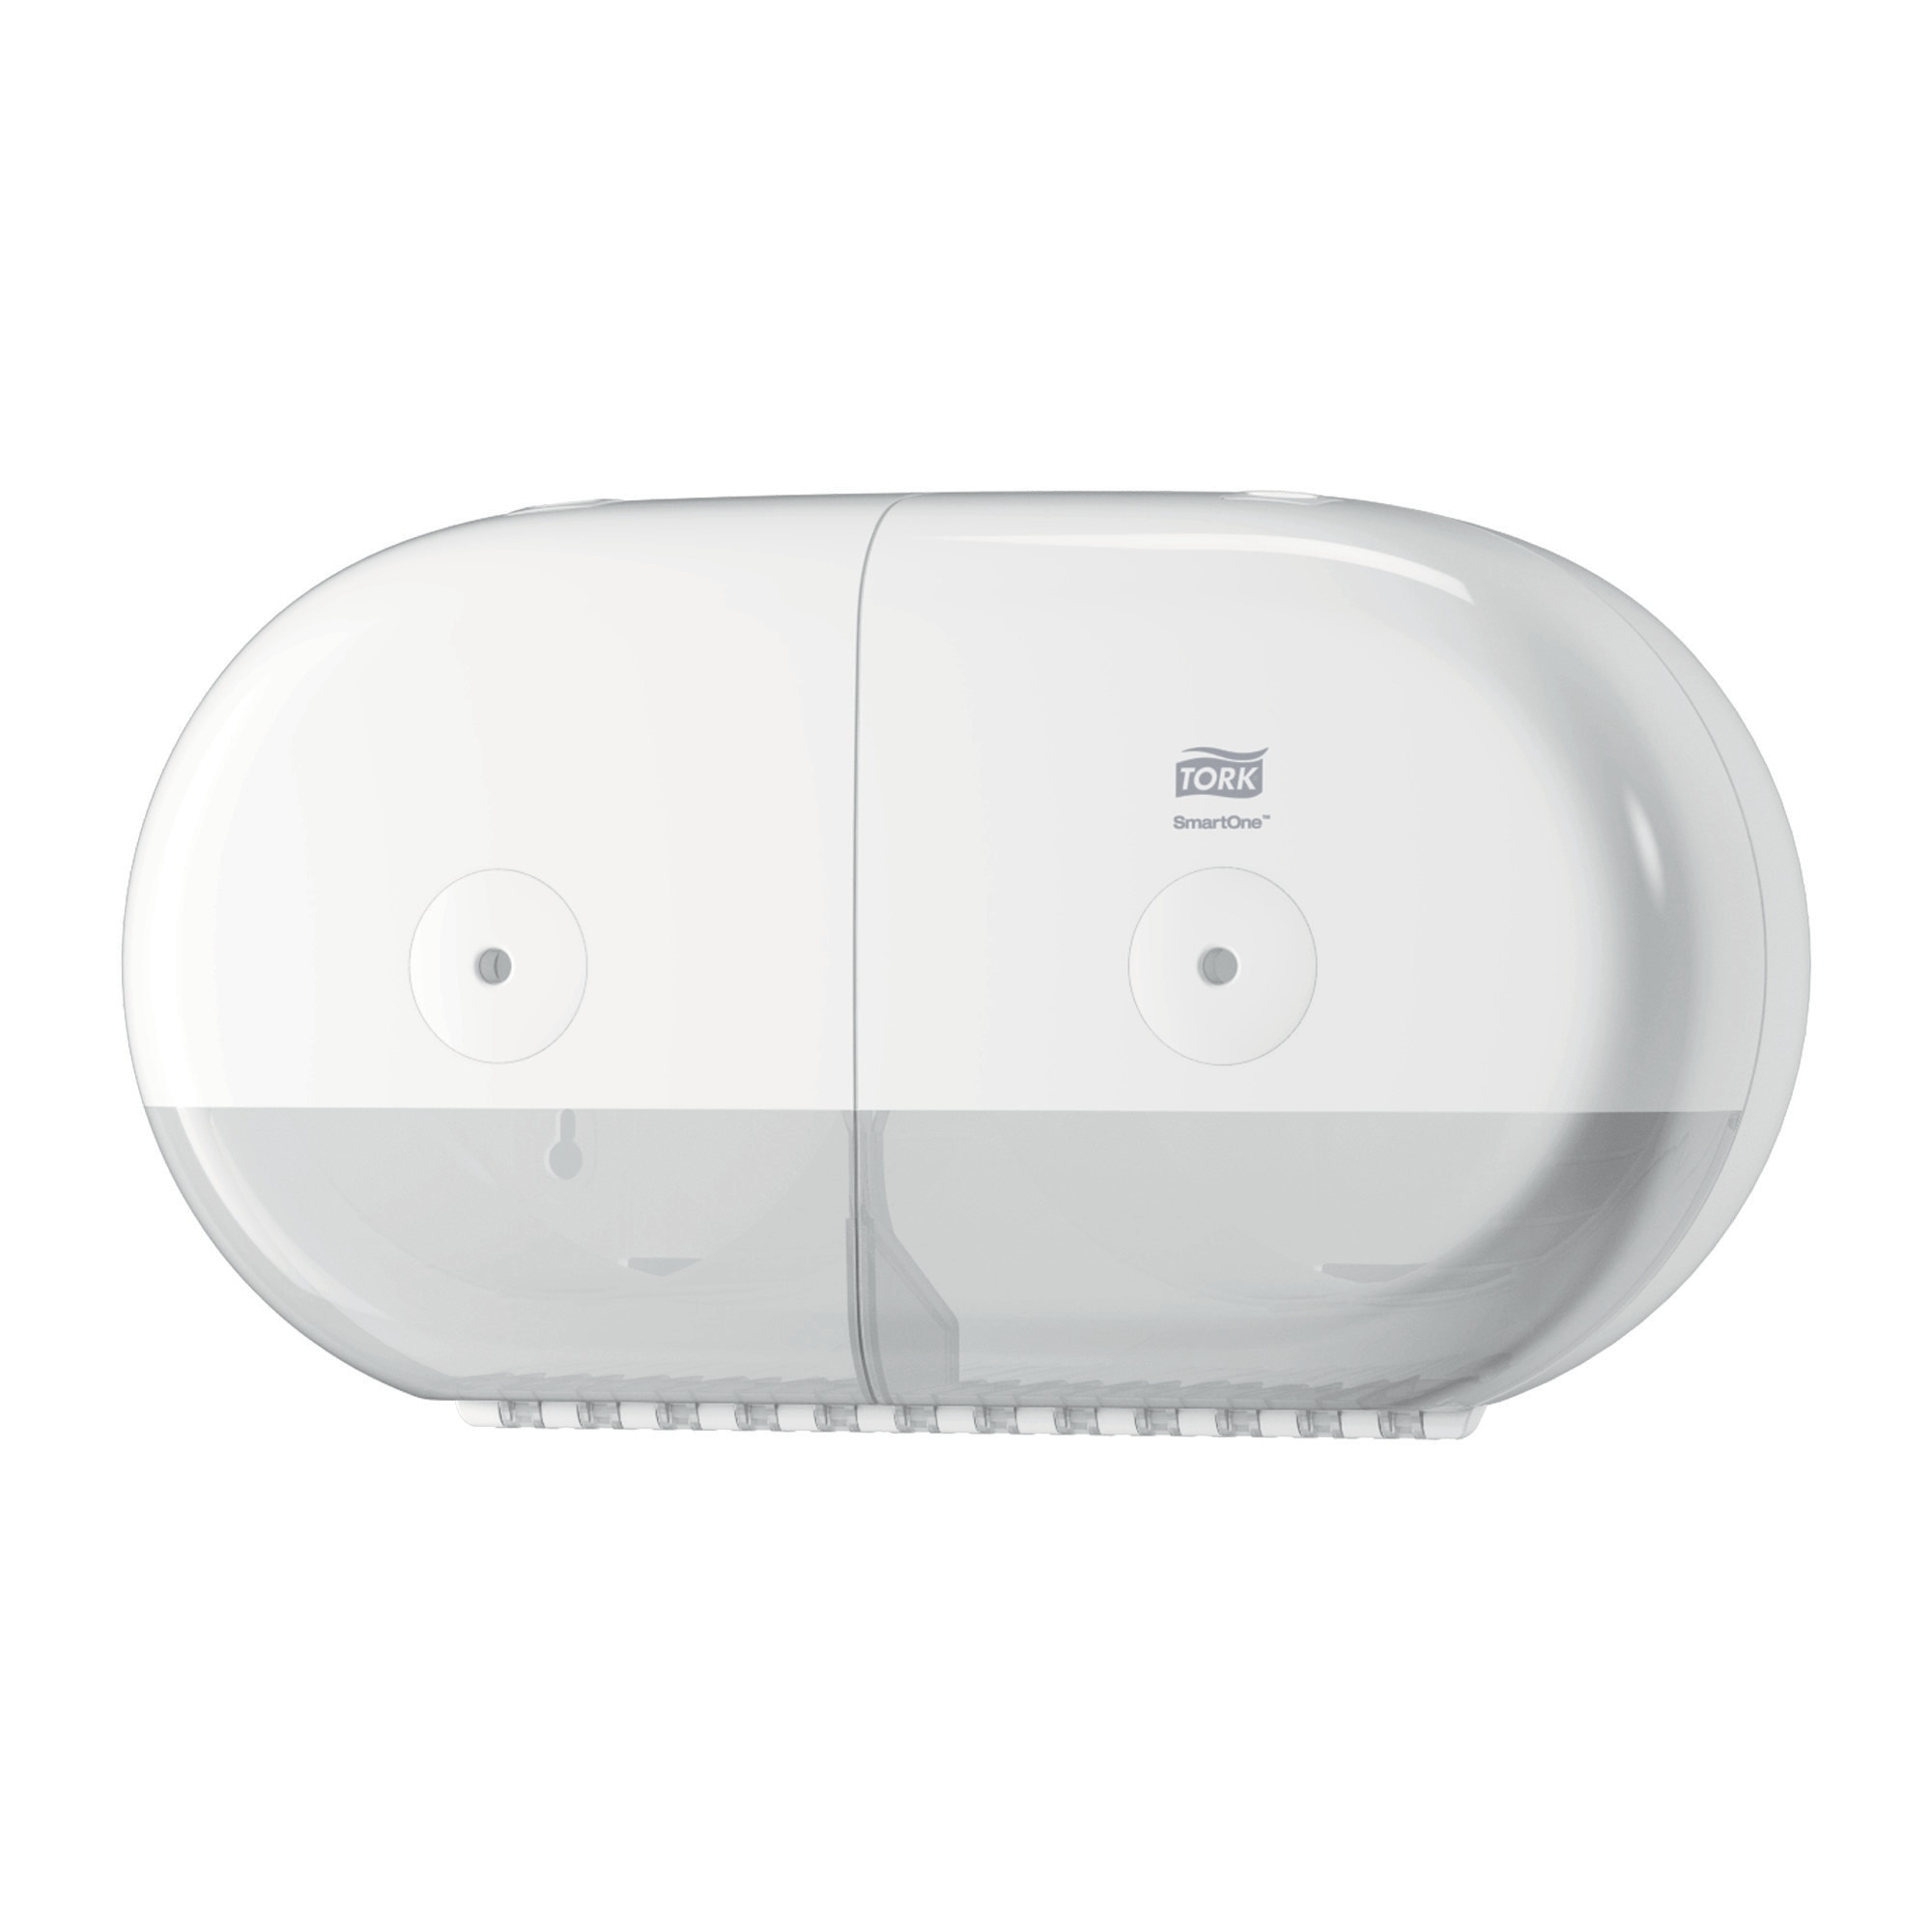 SmartOne Twin Mini T9 Toiletpapierdispenser